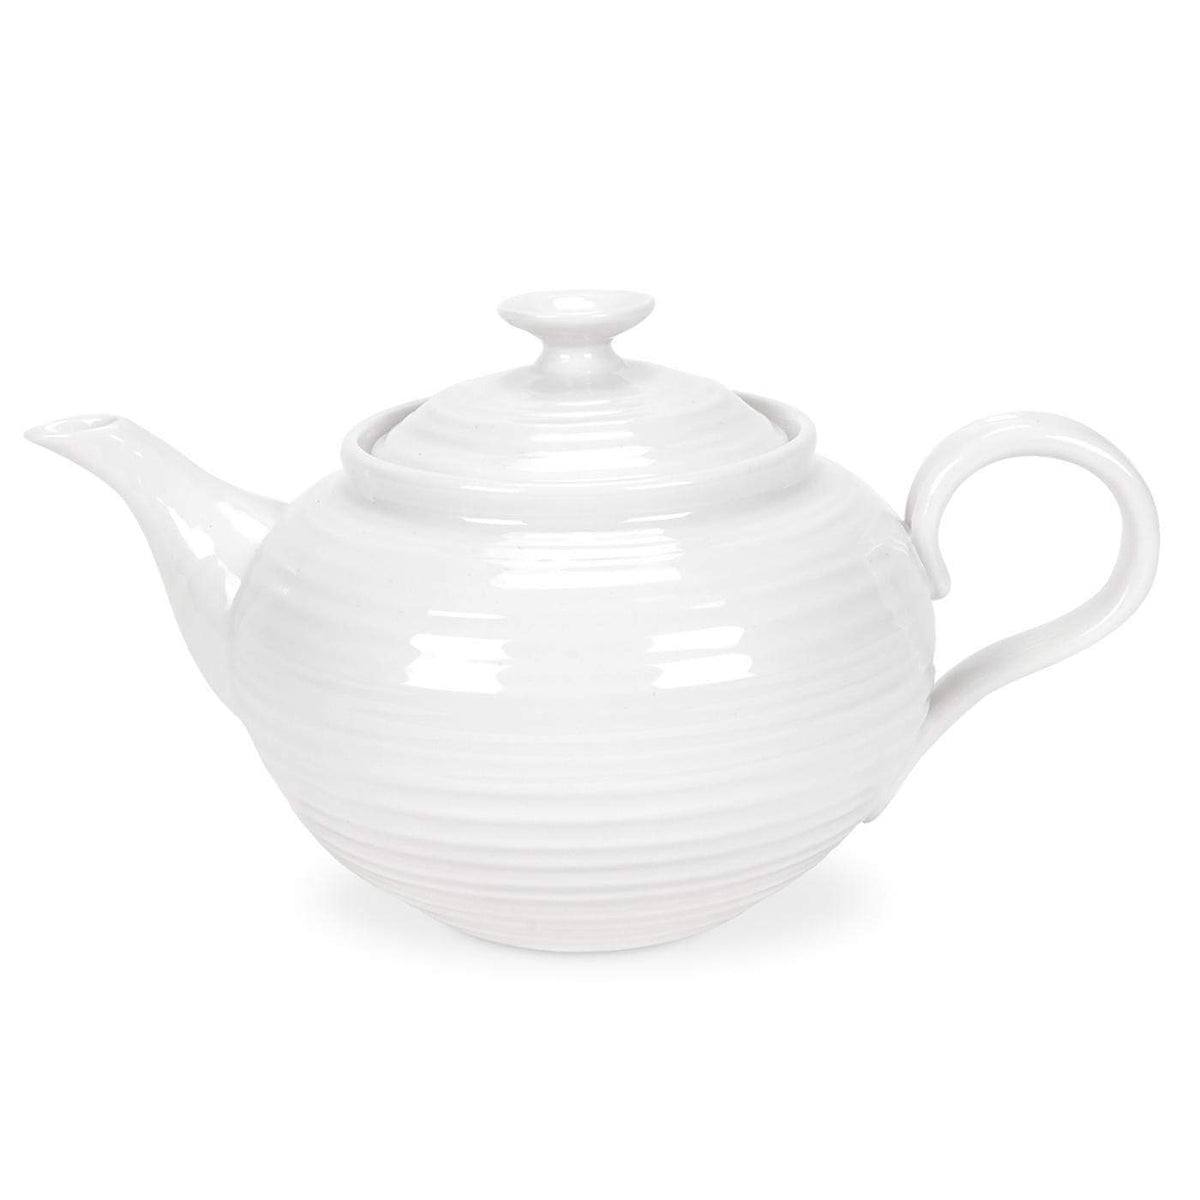 Sophie Conran for Portmeirion White Teapot - SAK Home